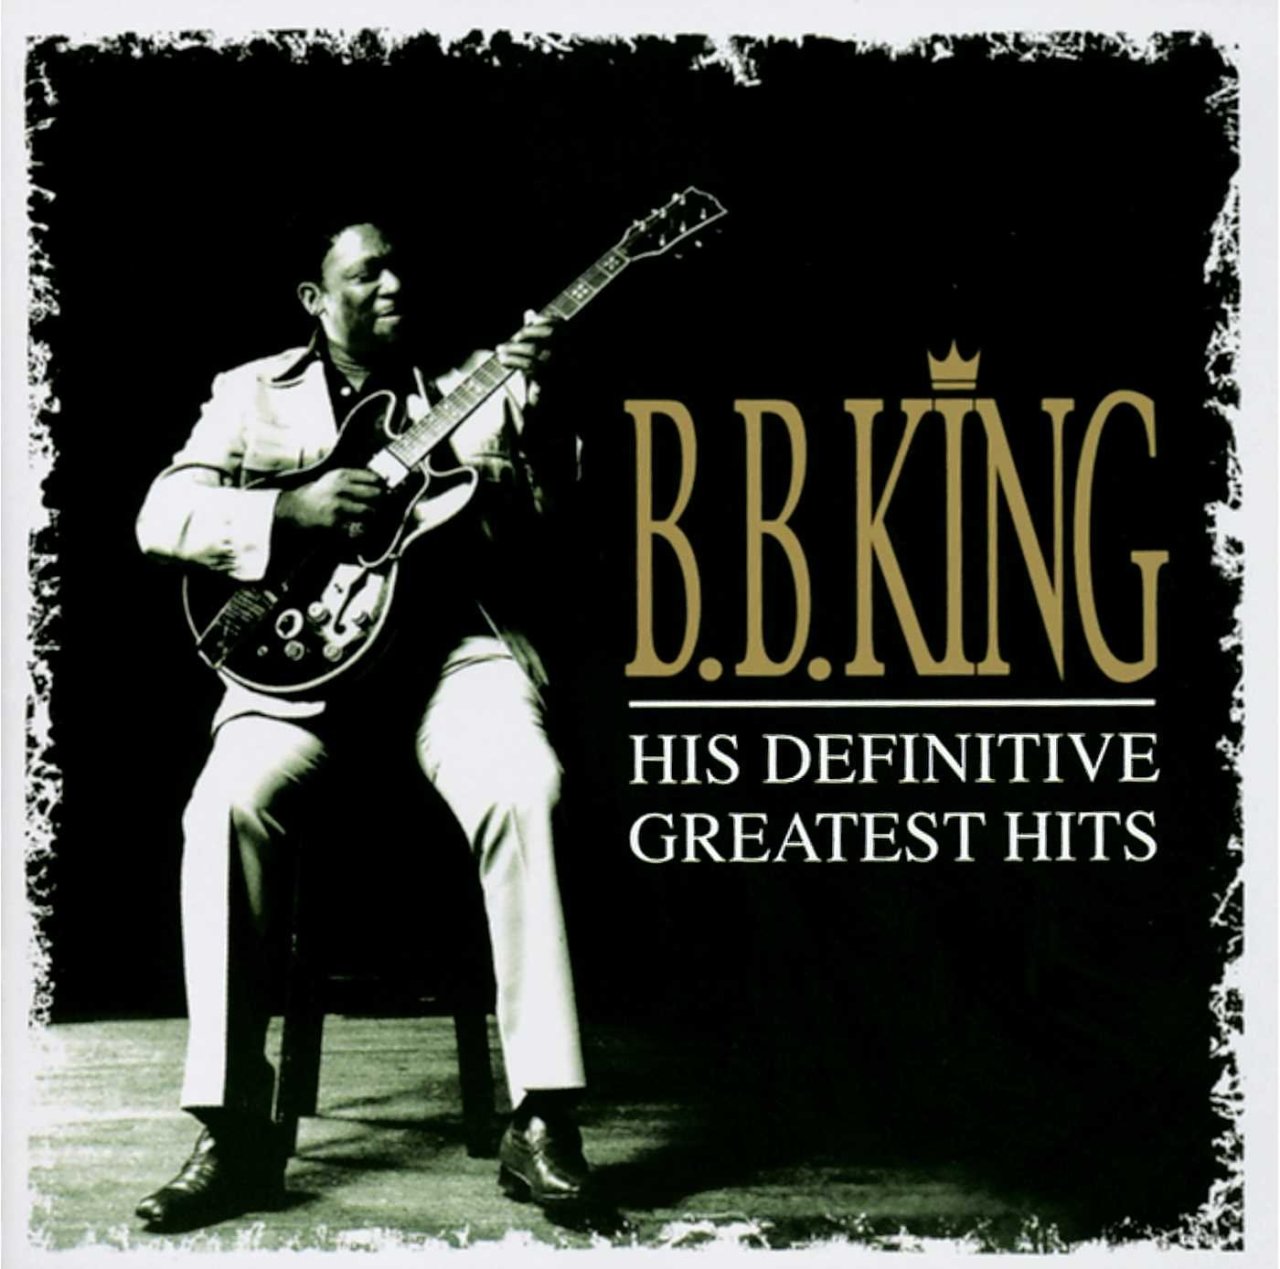 B.B.KING - HIS DEFINITIVE GREATEST HITS (1999) - 2CD BLUES SIFIR